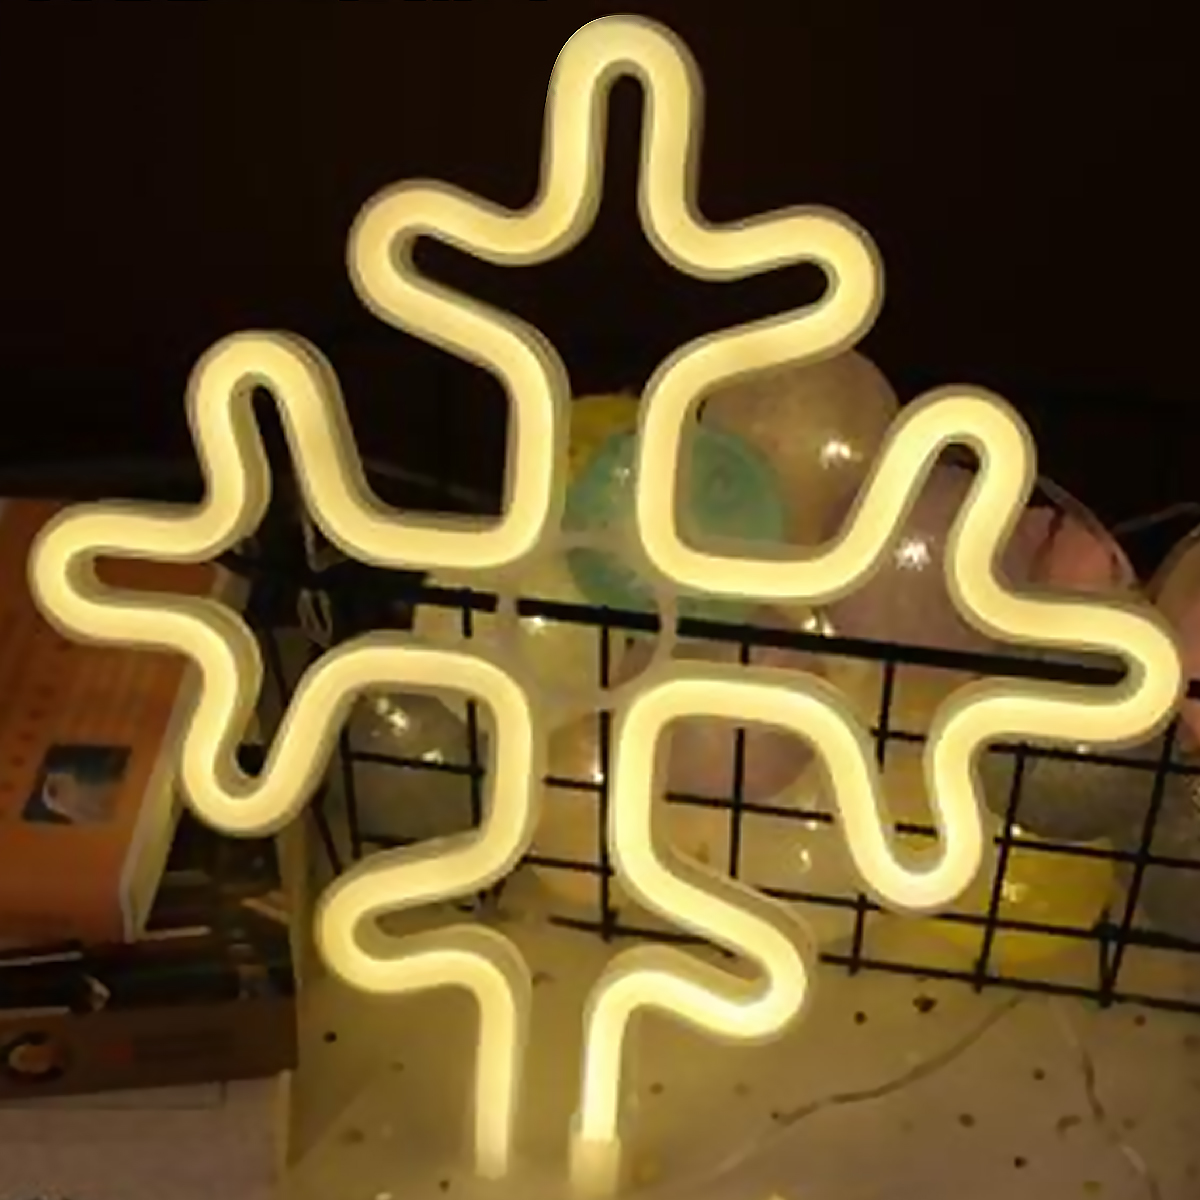 BatteryUSB-Neon-Light-Sign-LED-Lamp-Shaped-Night-Light-Art-Wall-Warm-Party-Christmas-Decoration-1800988-12